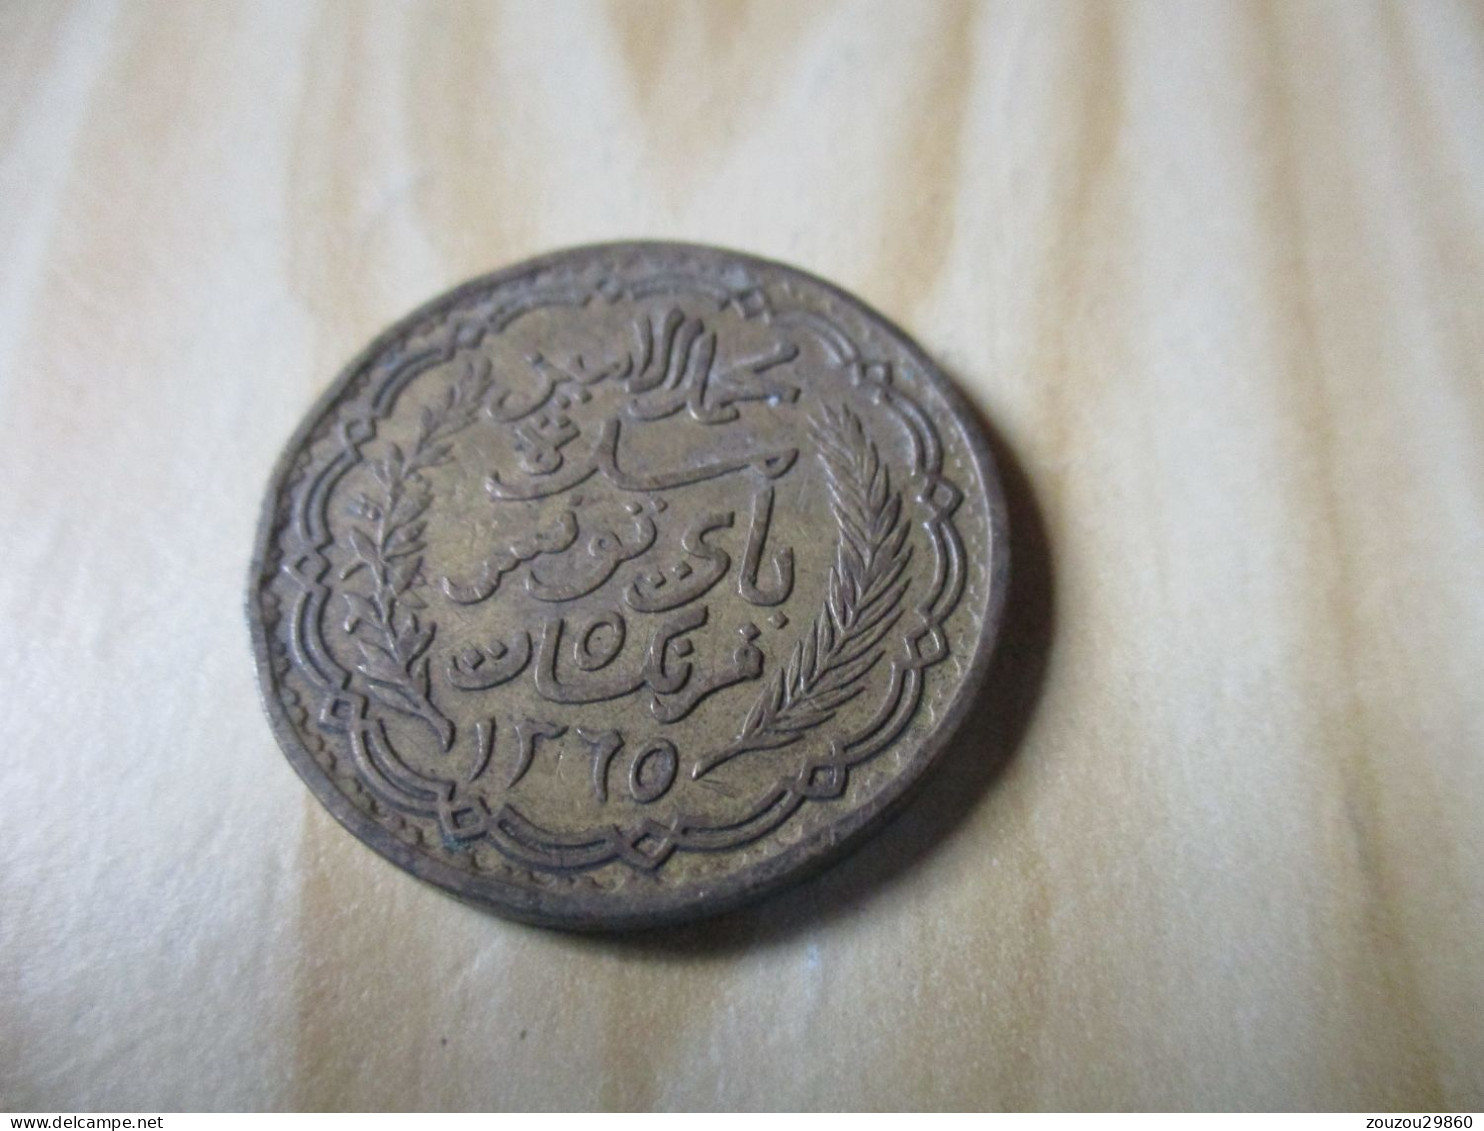 Tunisie - 5 Francs Muhammad VIII Al-Amin 1946.N°712. - Tunisia